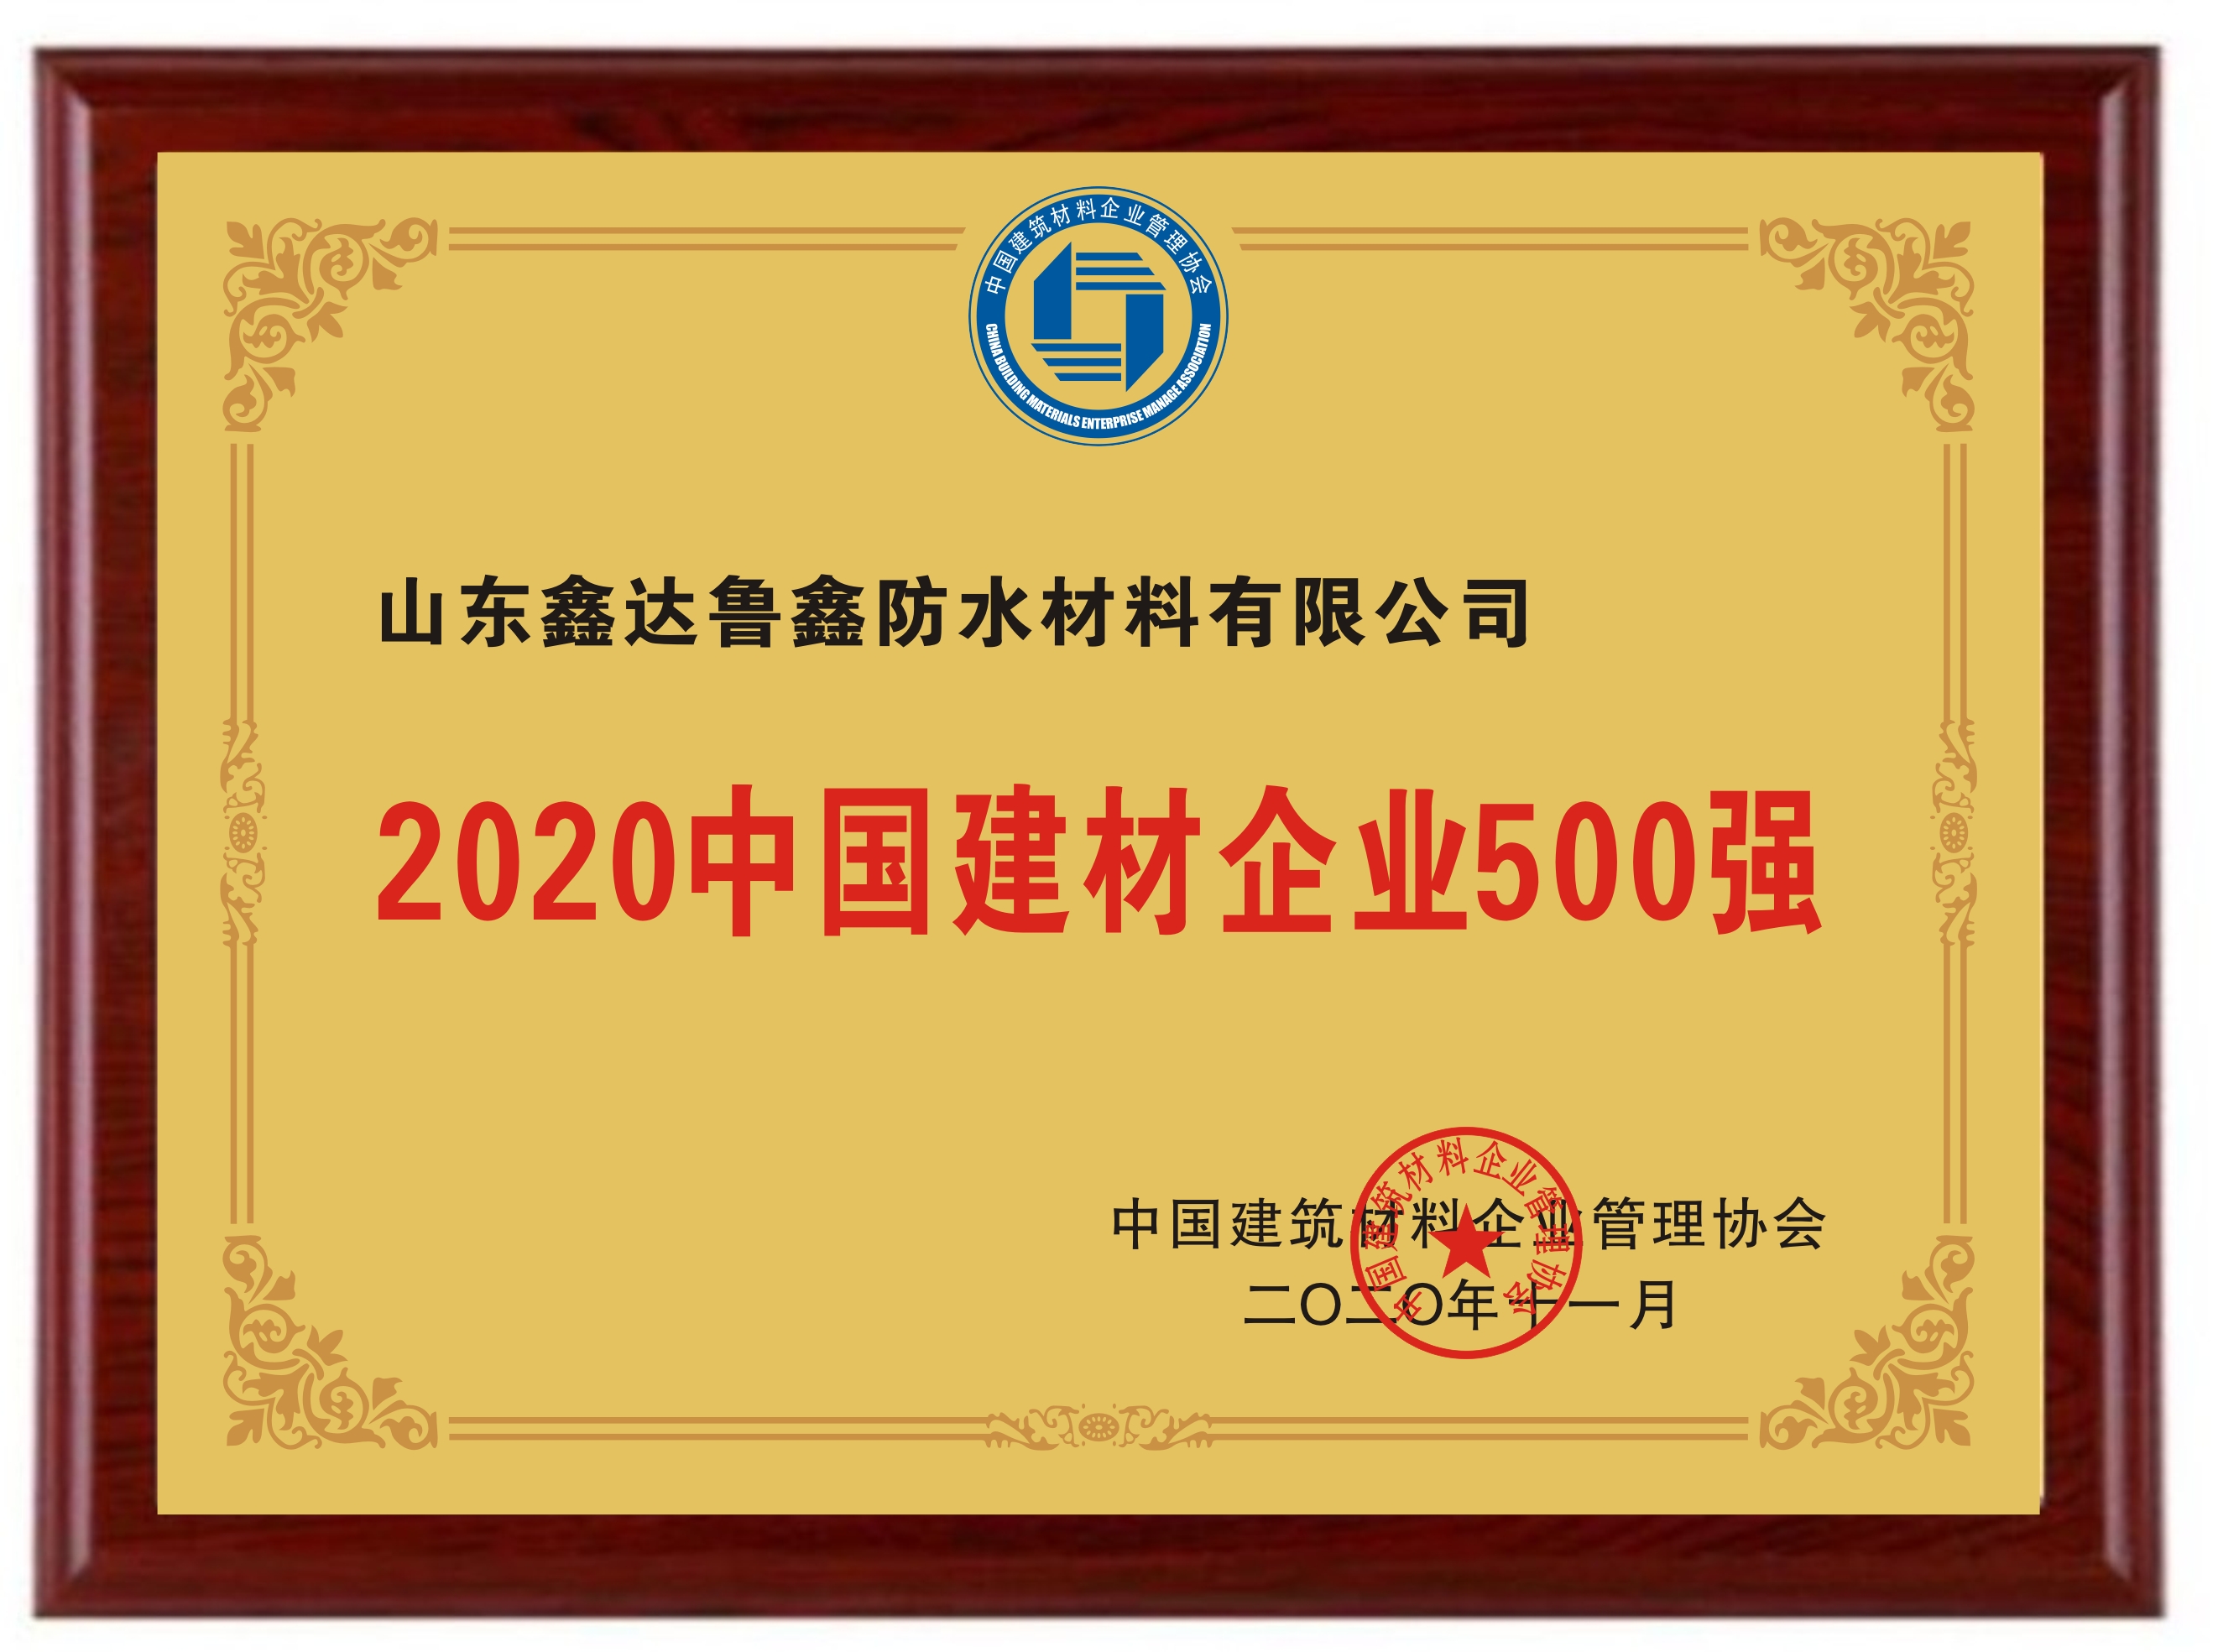 Top 500 building materials enterprises in China in 2020